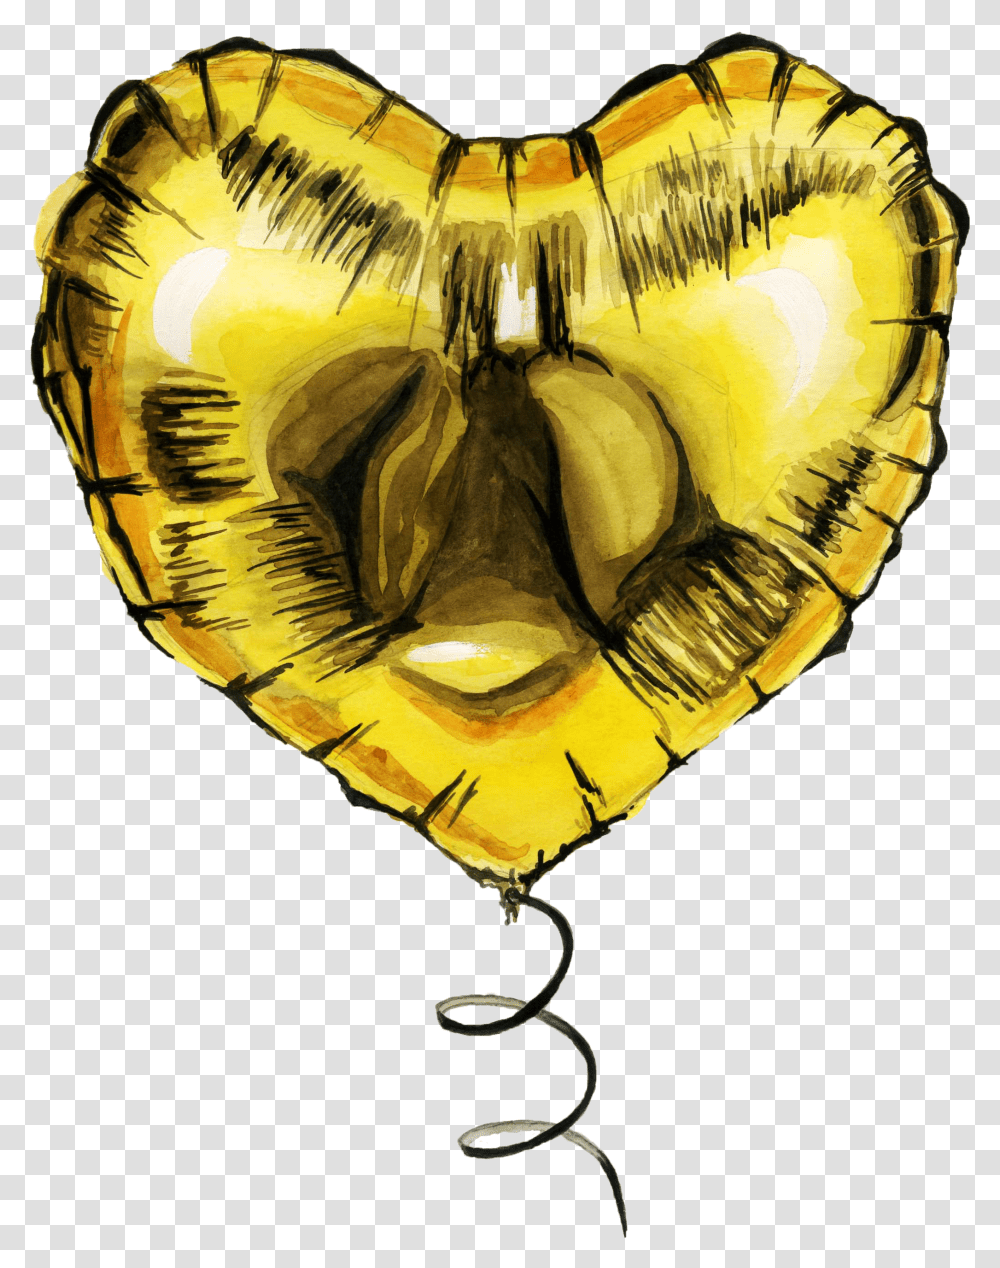 Watercolor Balloons Metallic Balloon Clip Art Transparent Png